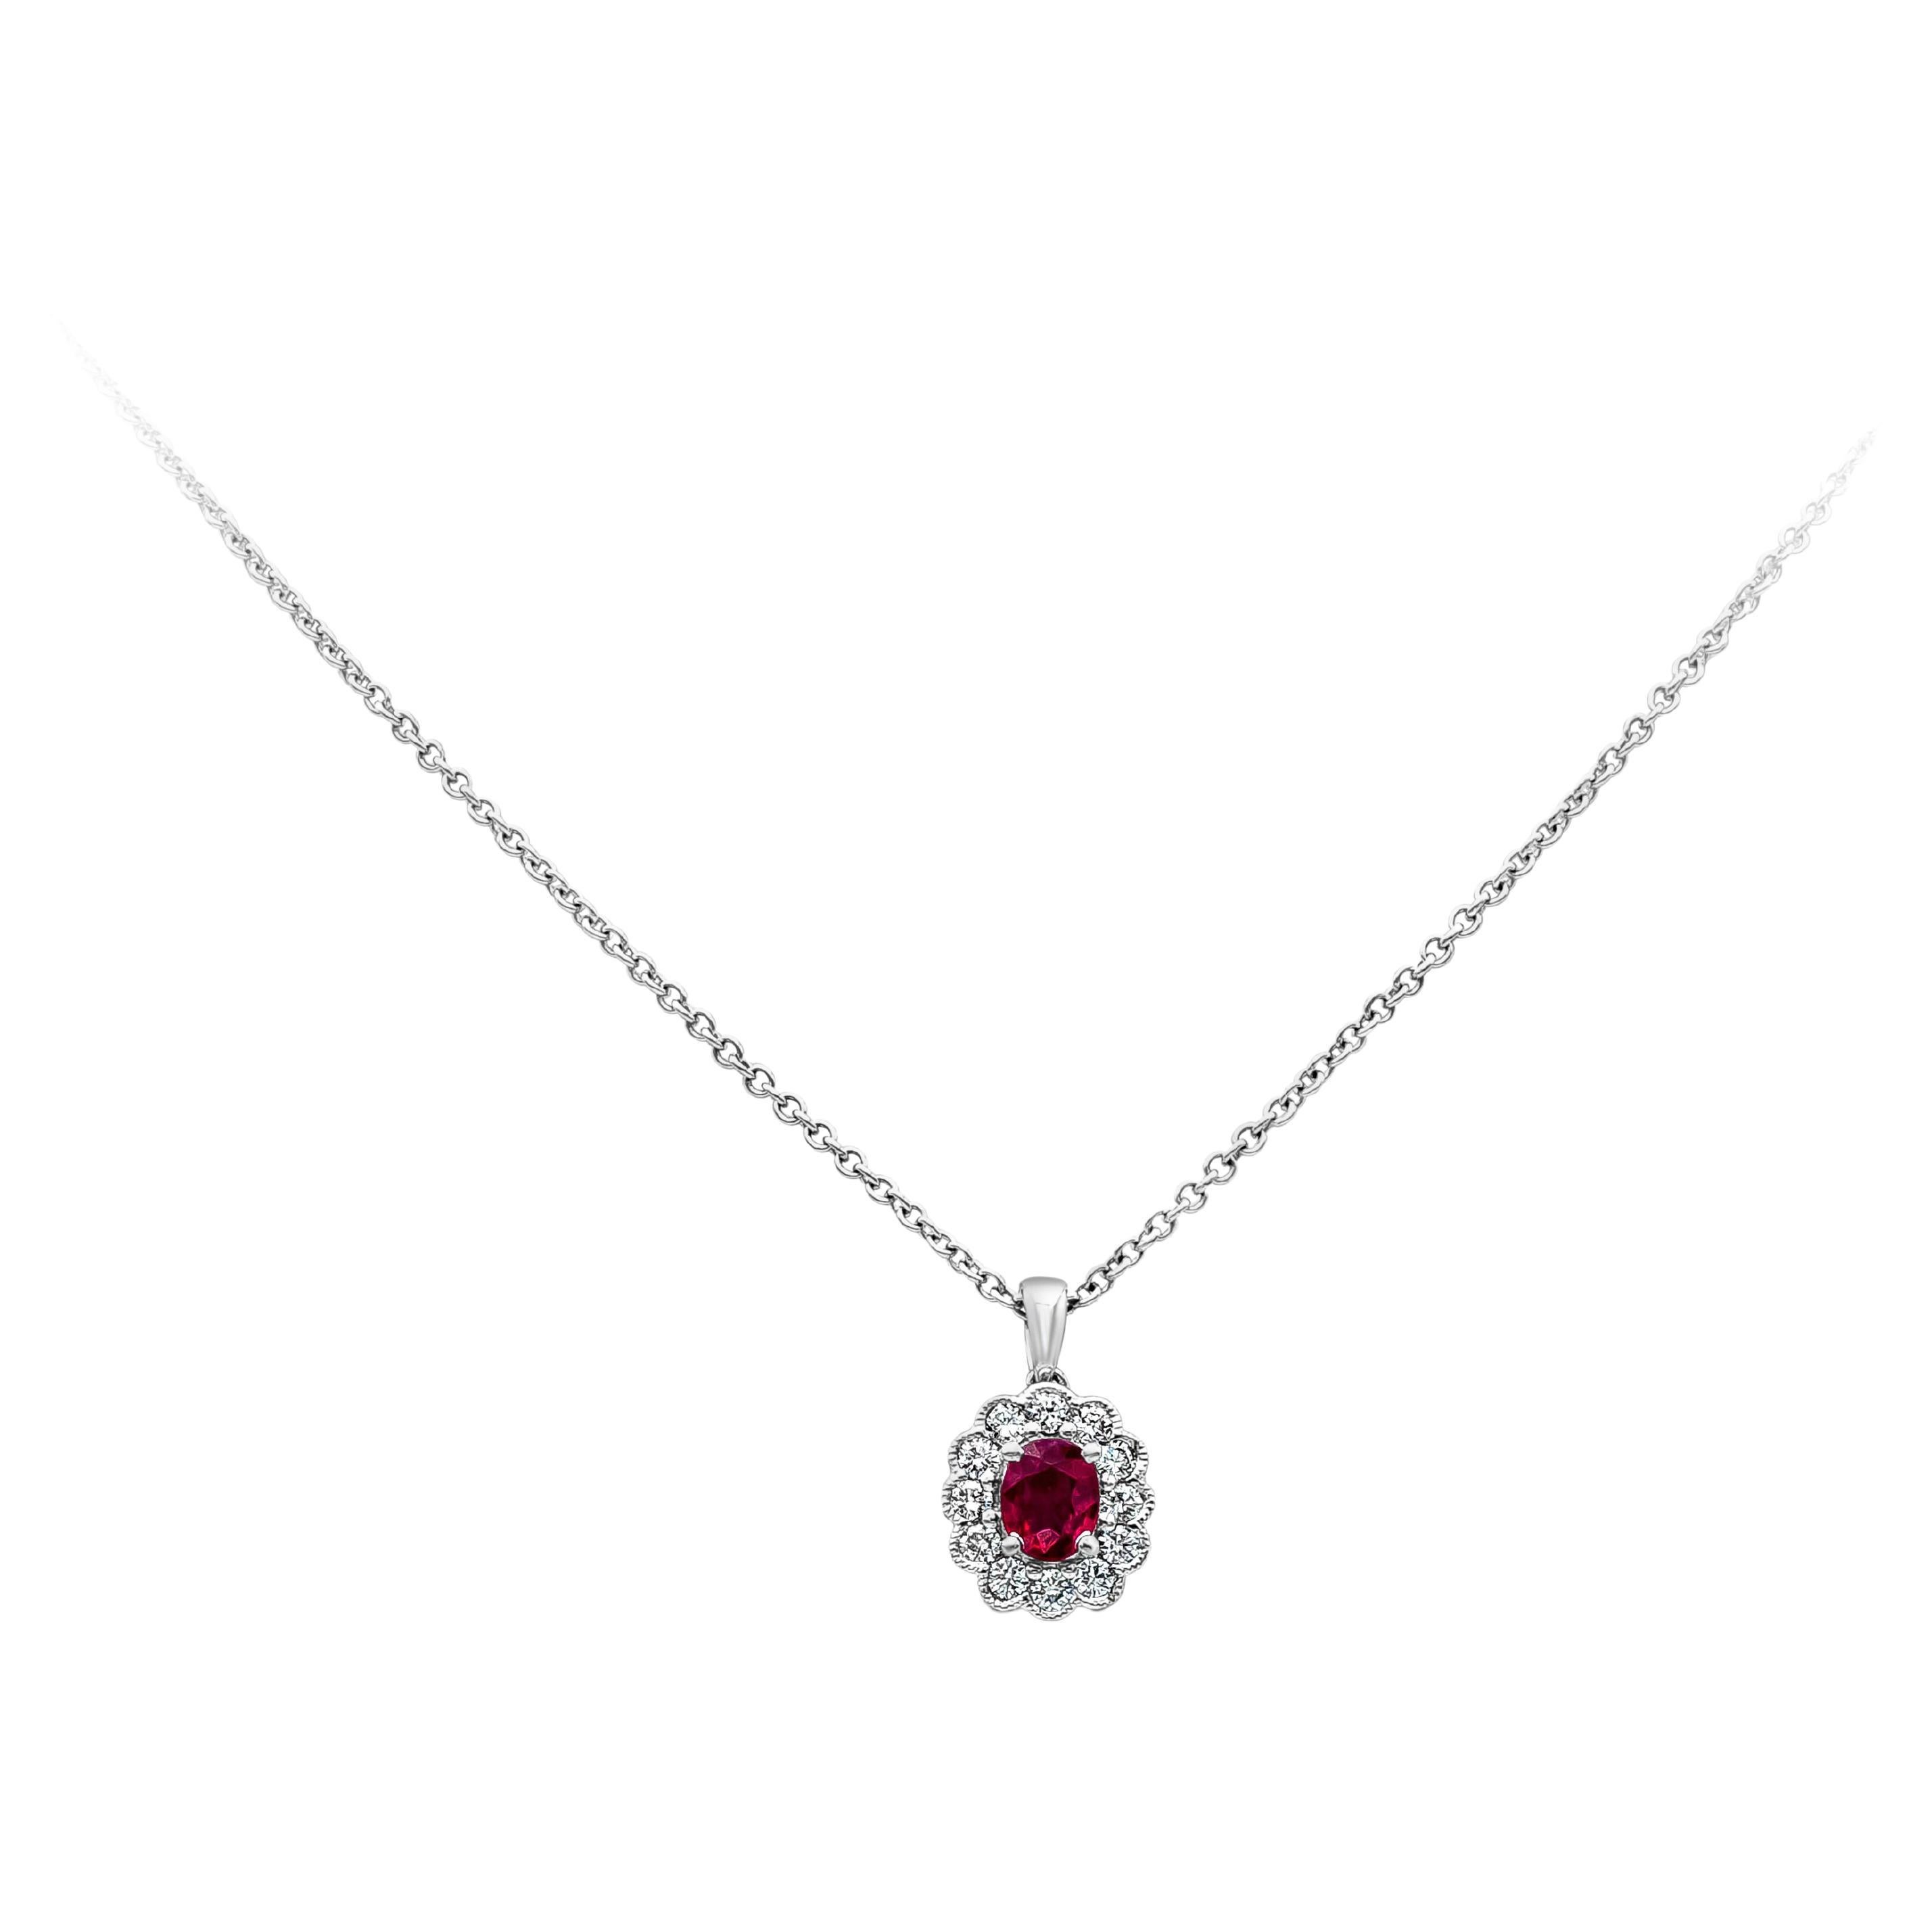 Roman Malakov 0.65 Carat Oval Cut Ruby and Diamond Halo Pendant Necklace